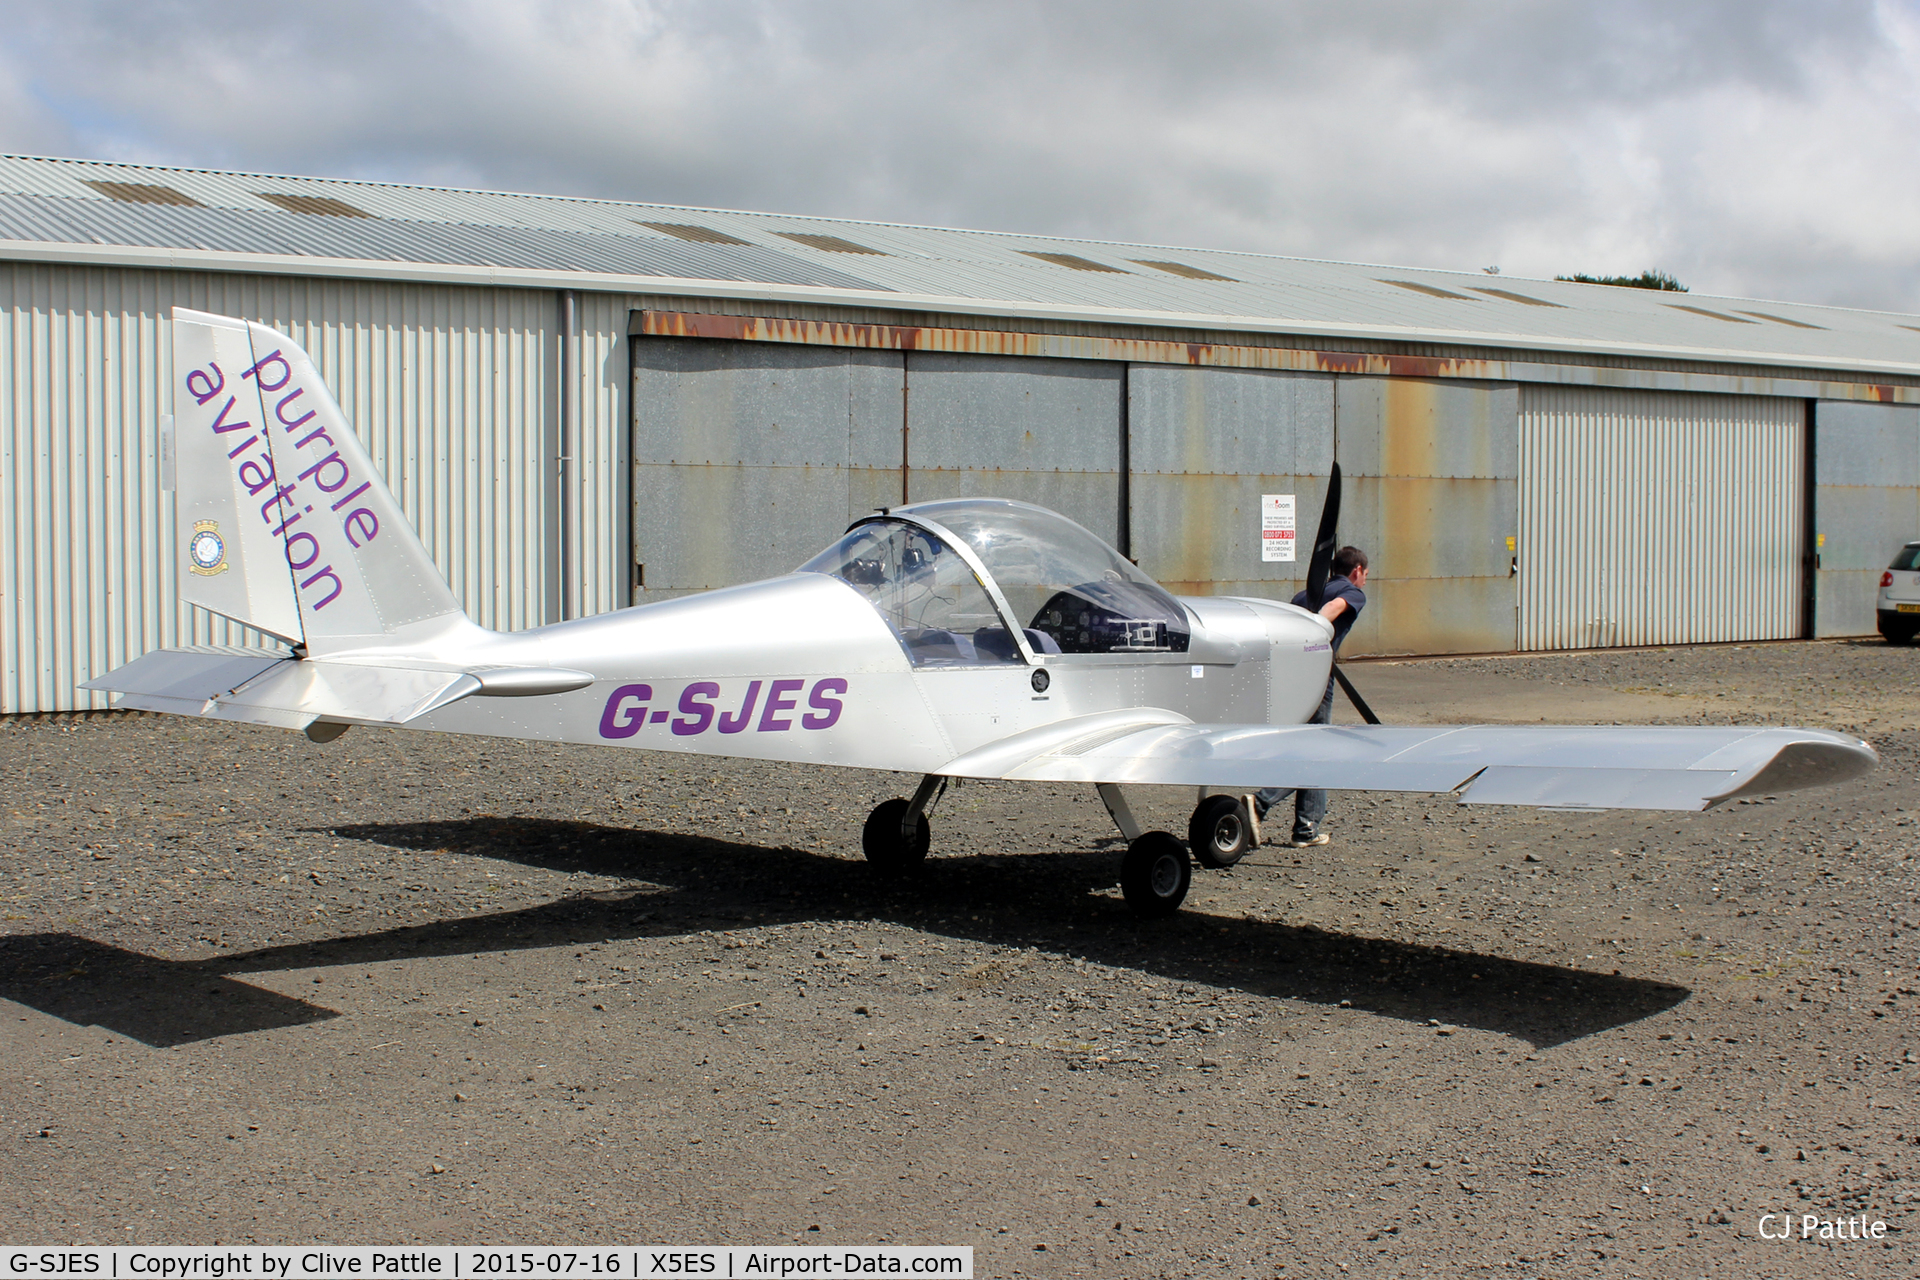 G-SJES, 2007 Cosmik EV-97 TeamEurostar UK C/N 2918, Under tow with based Purple Aviation at Eshott Airfield, Northumberland, UK.